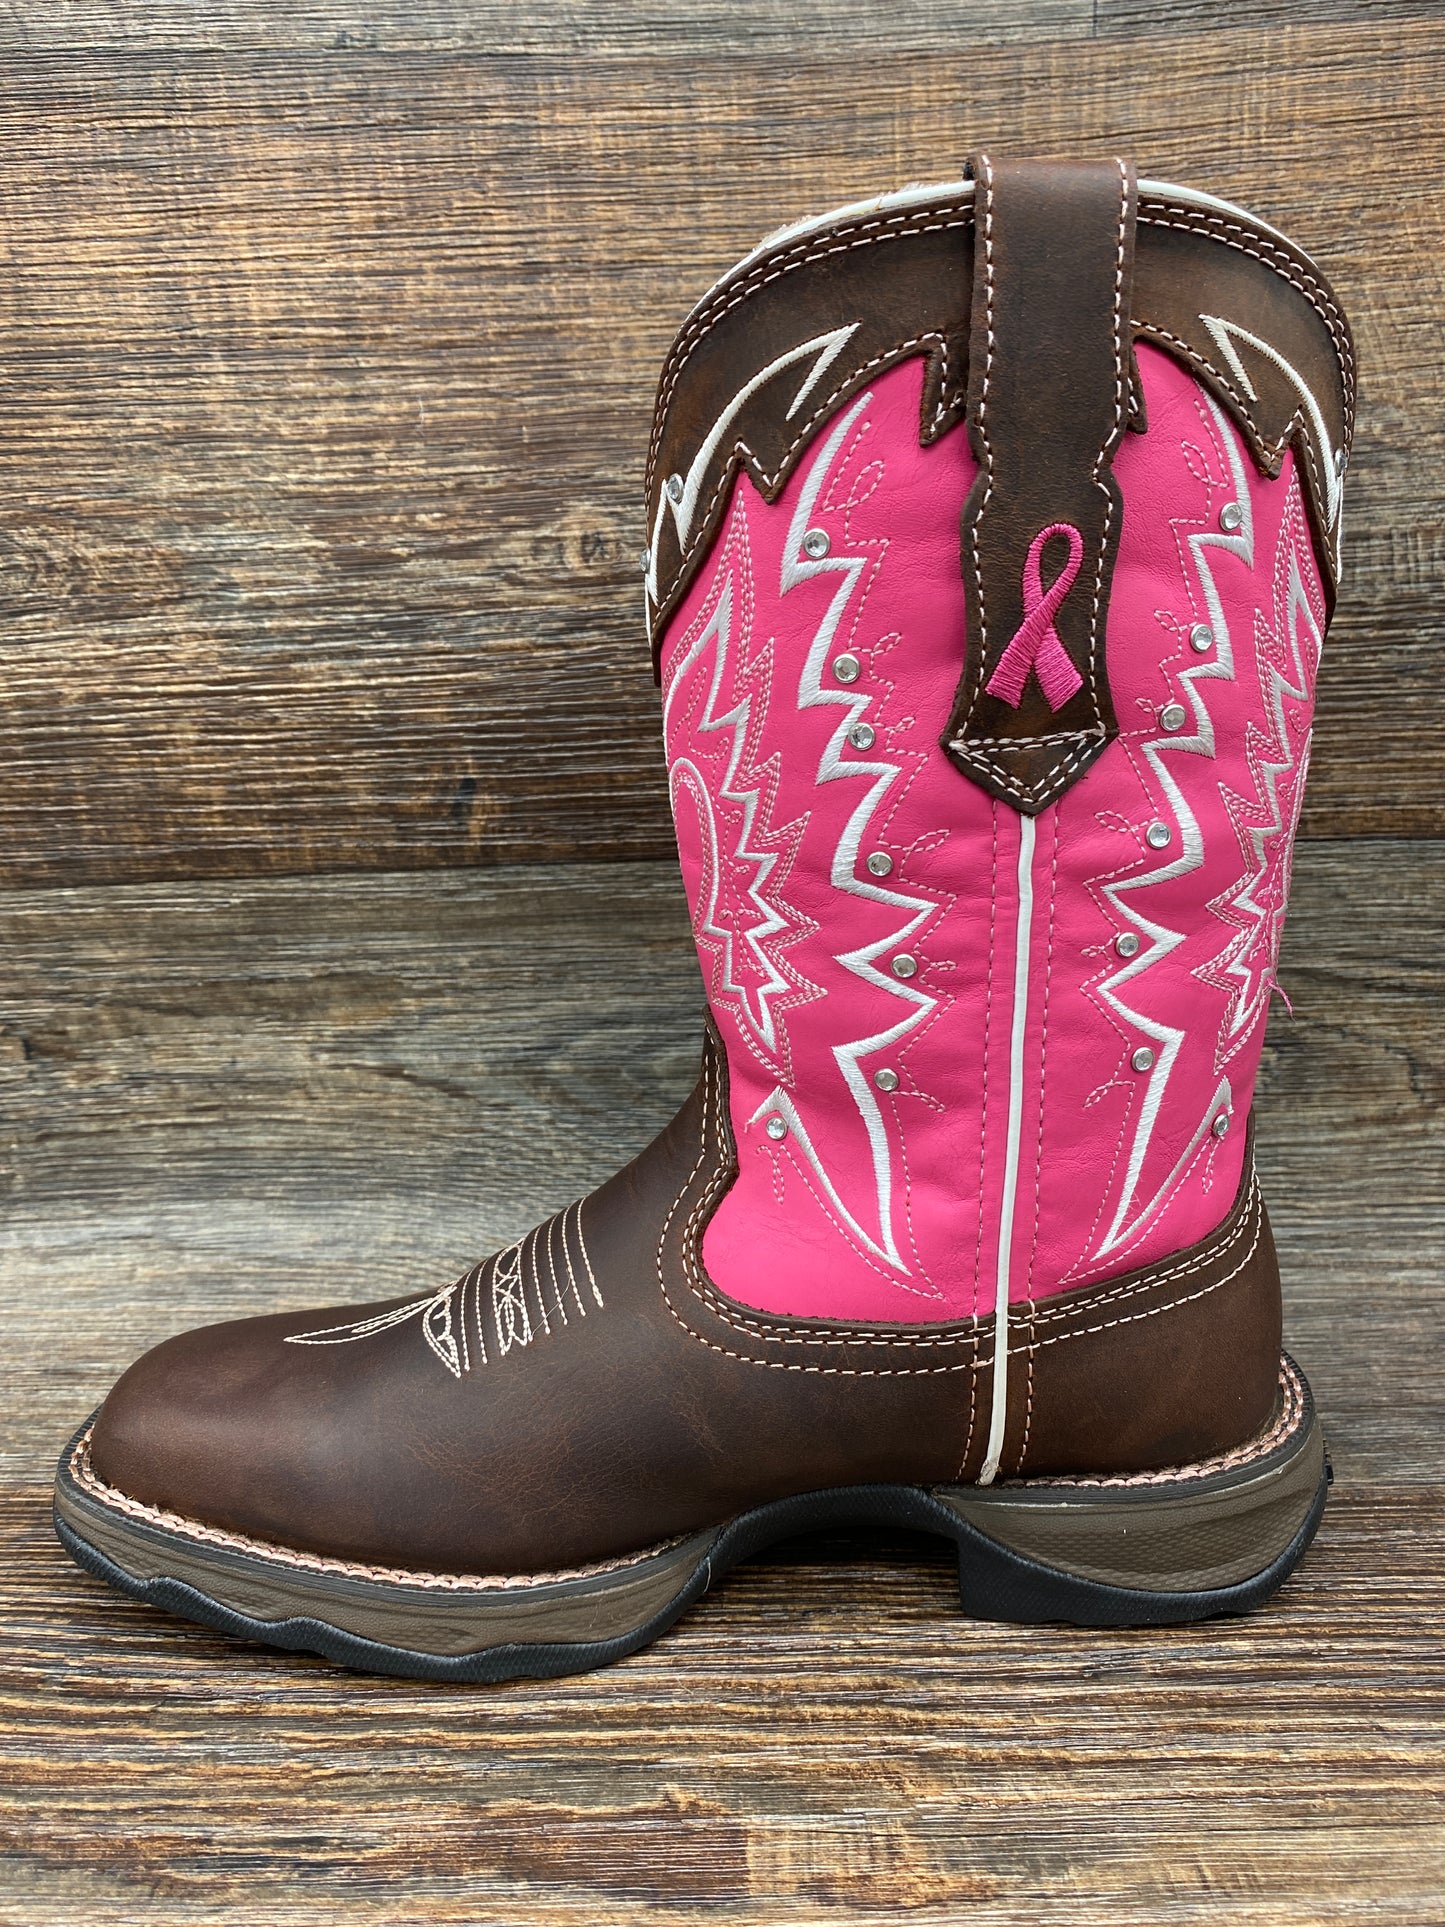 rd3557 Women's Pink Ribbon Lady Rebel Western Boot by Durango